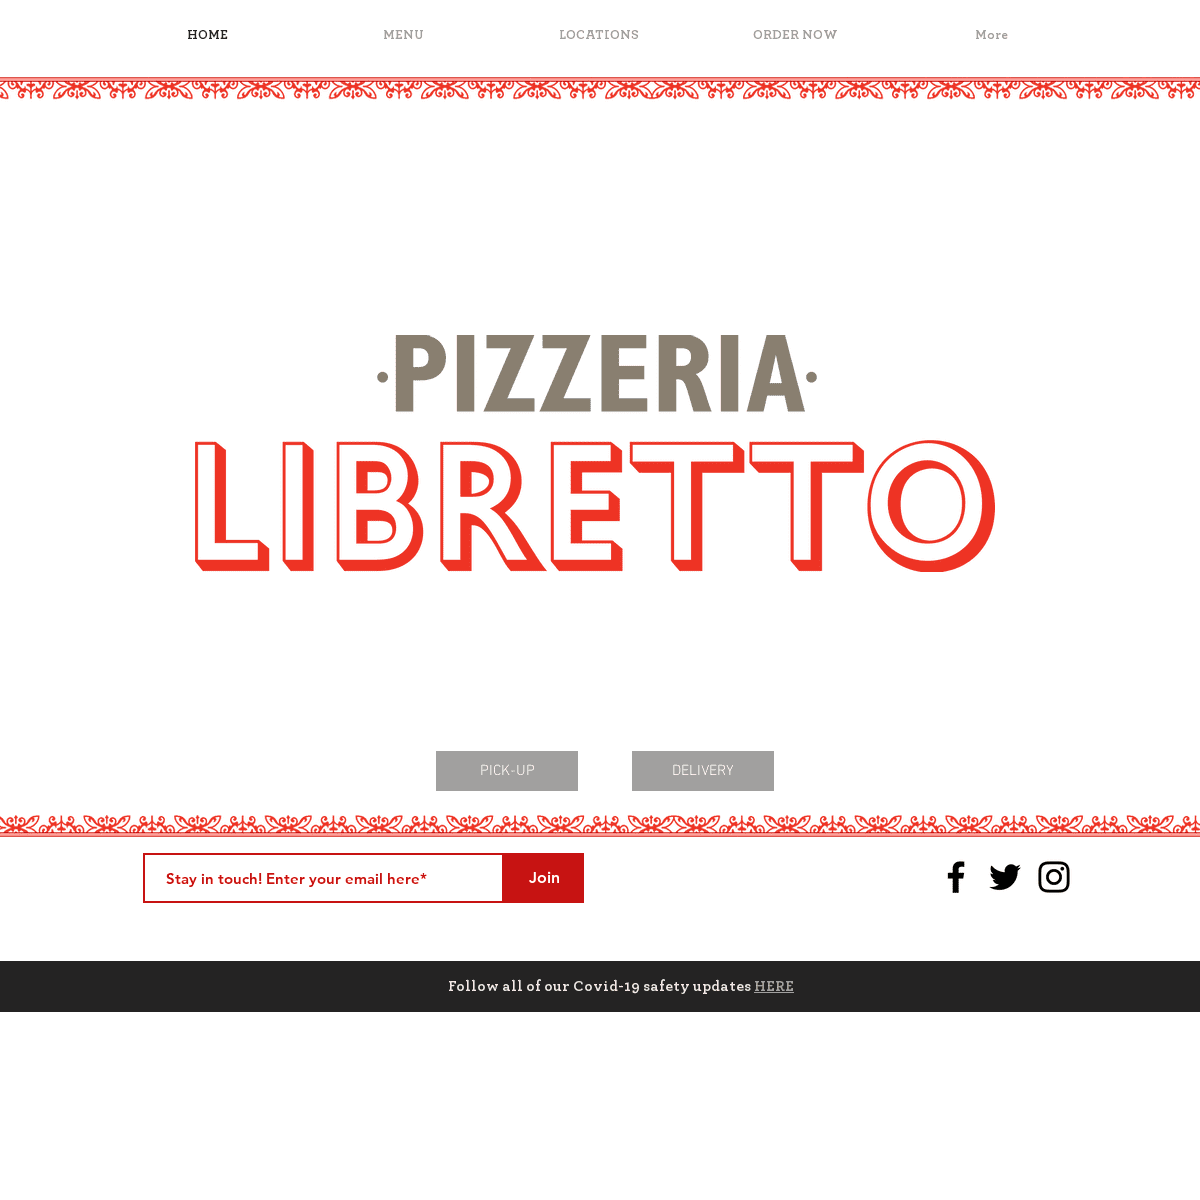 A complete backup of pizzerialibretto.com